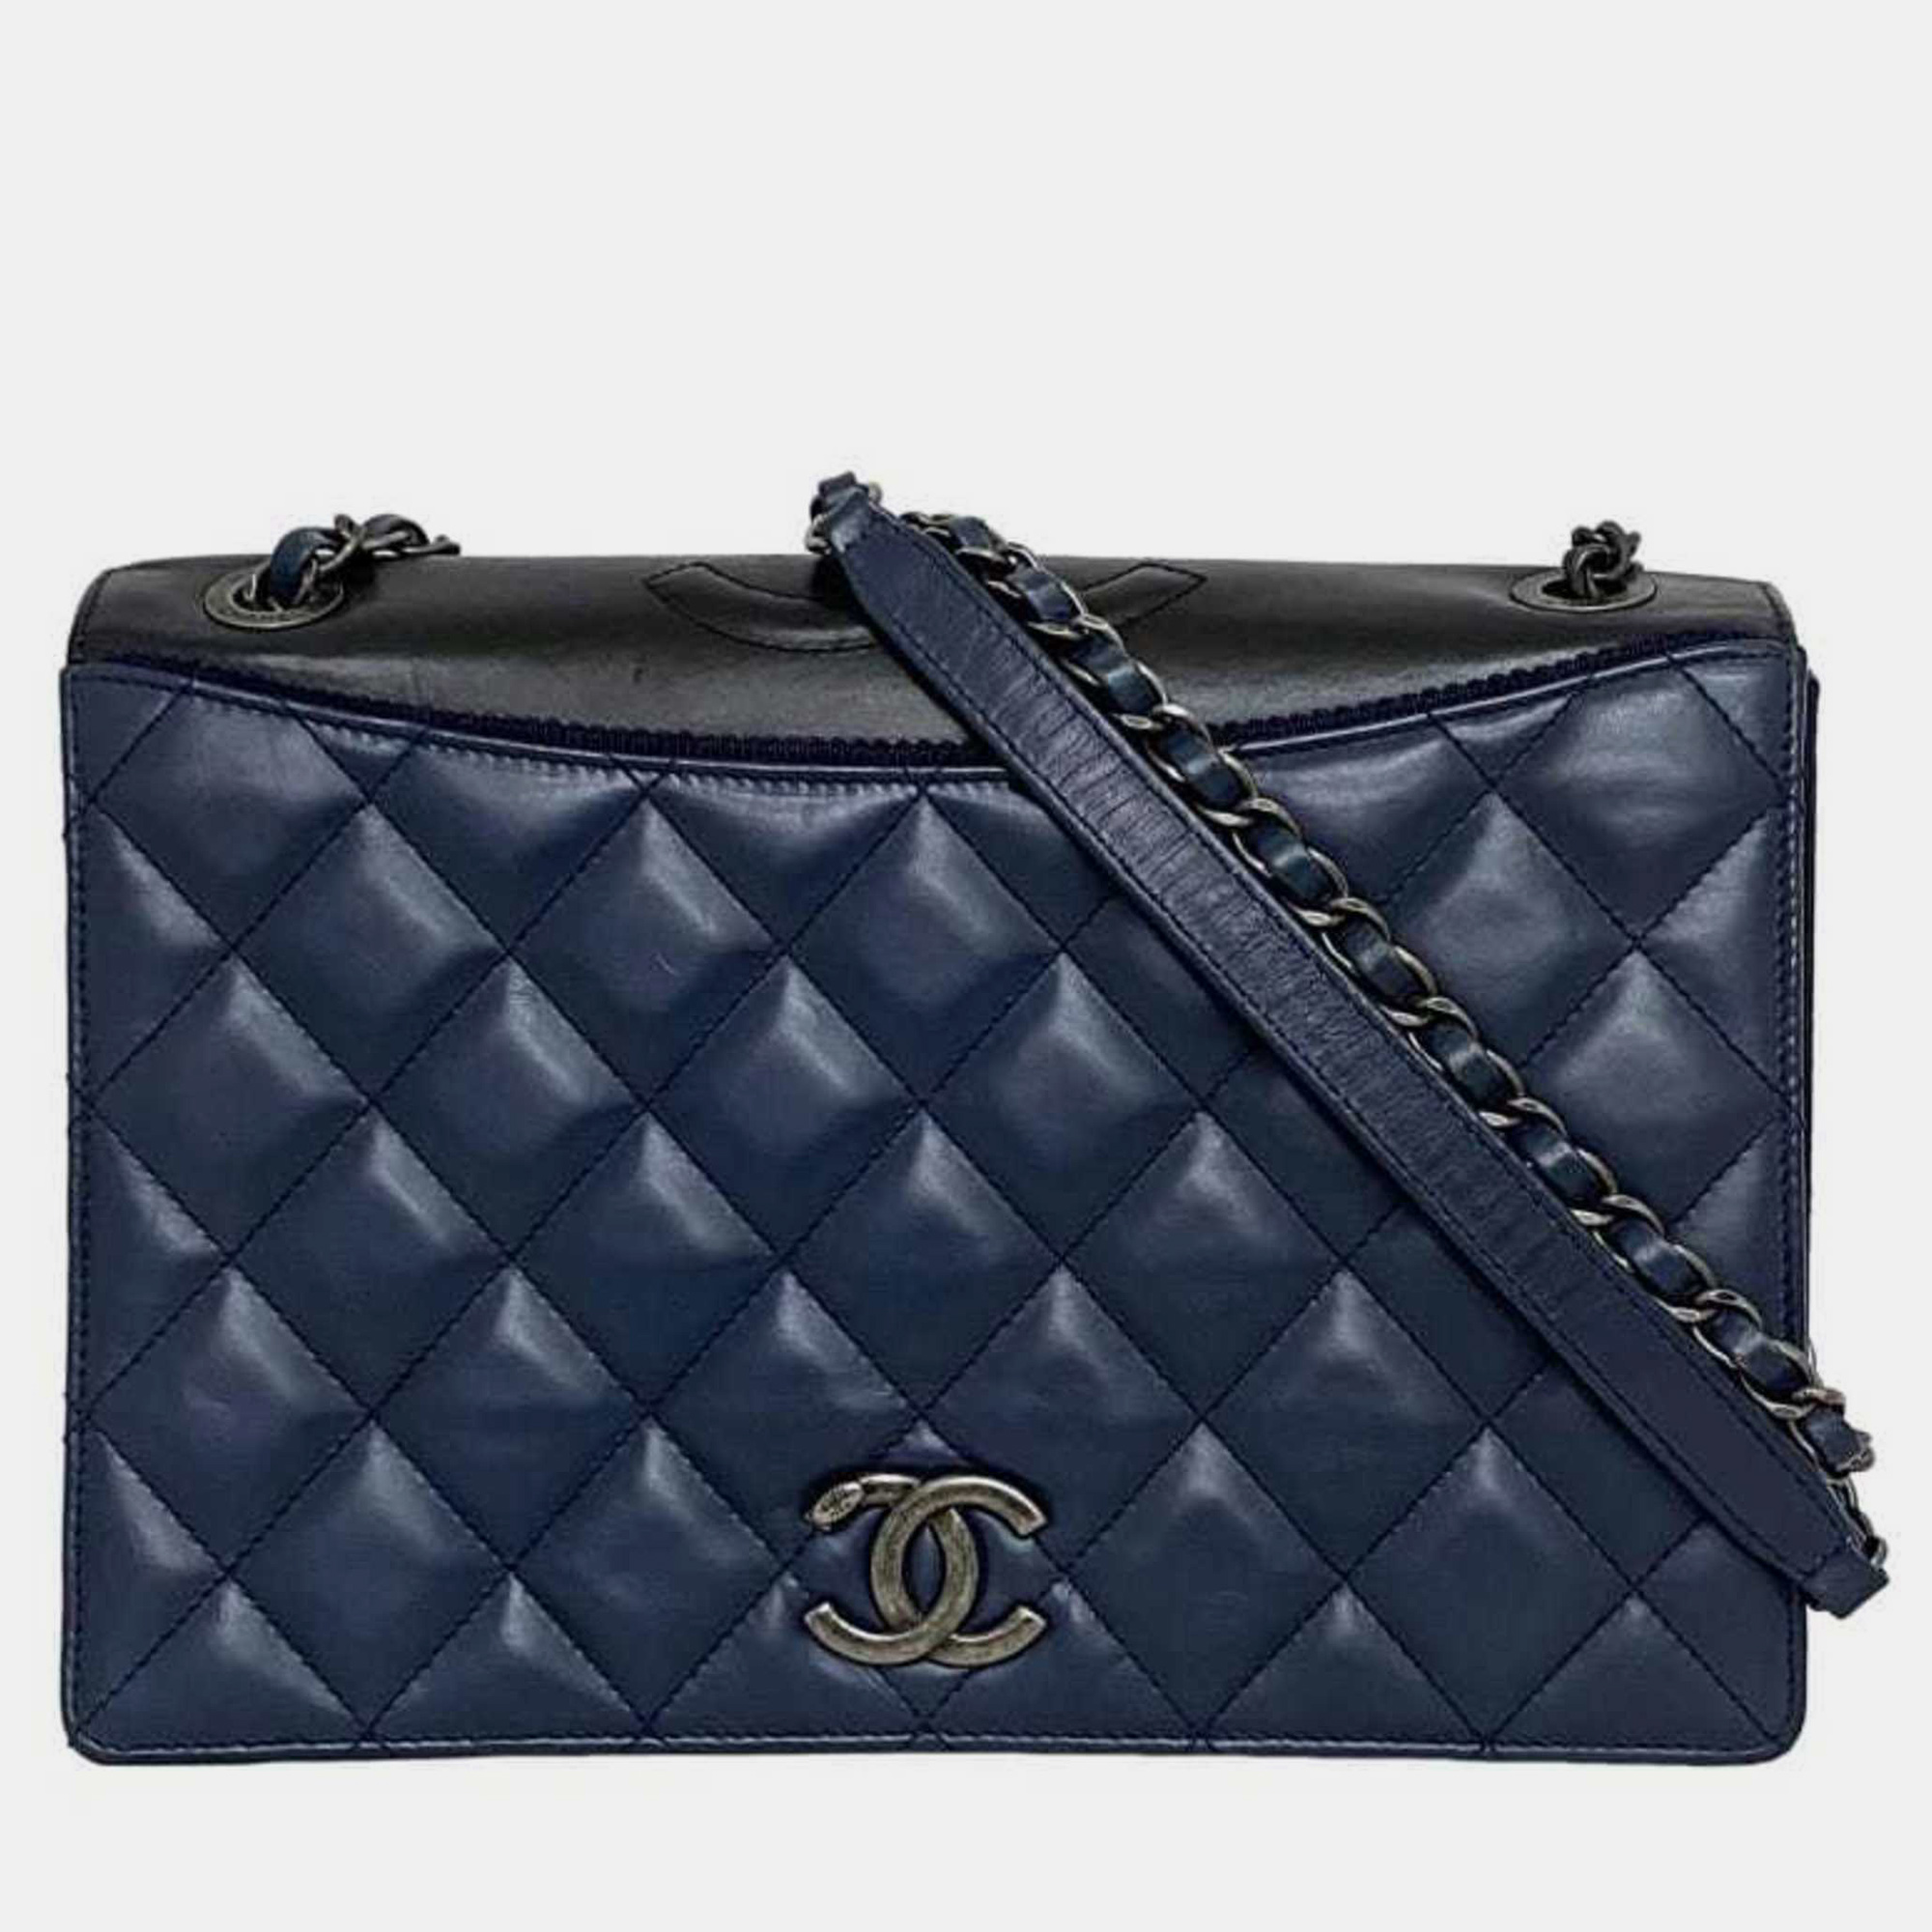 Chanel blue quilted lambskin medium ballerine flap bag